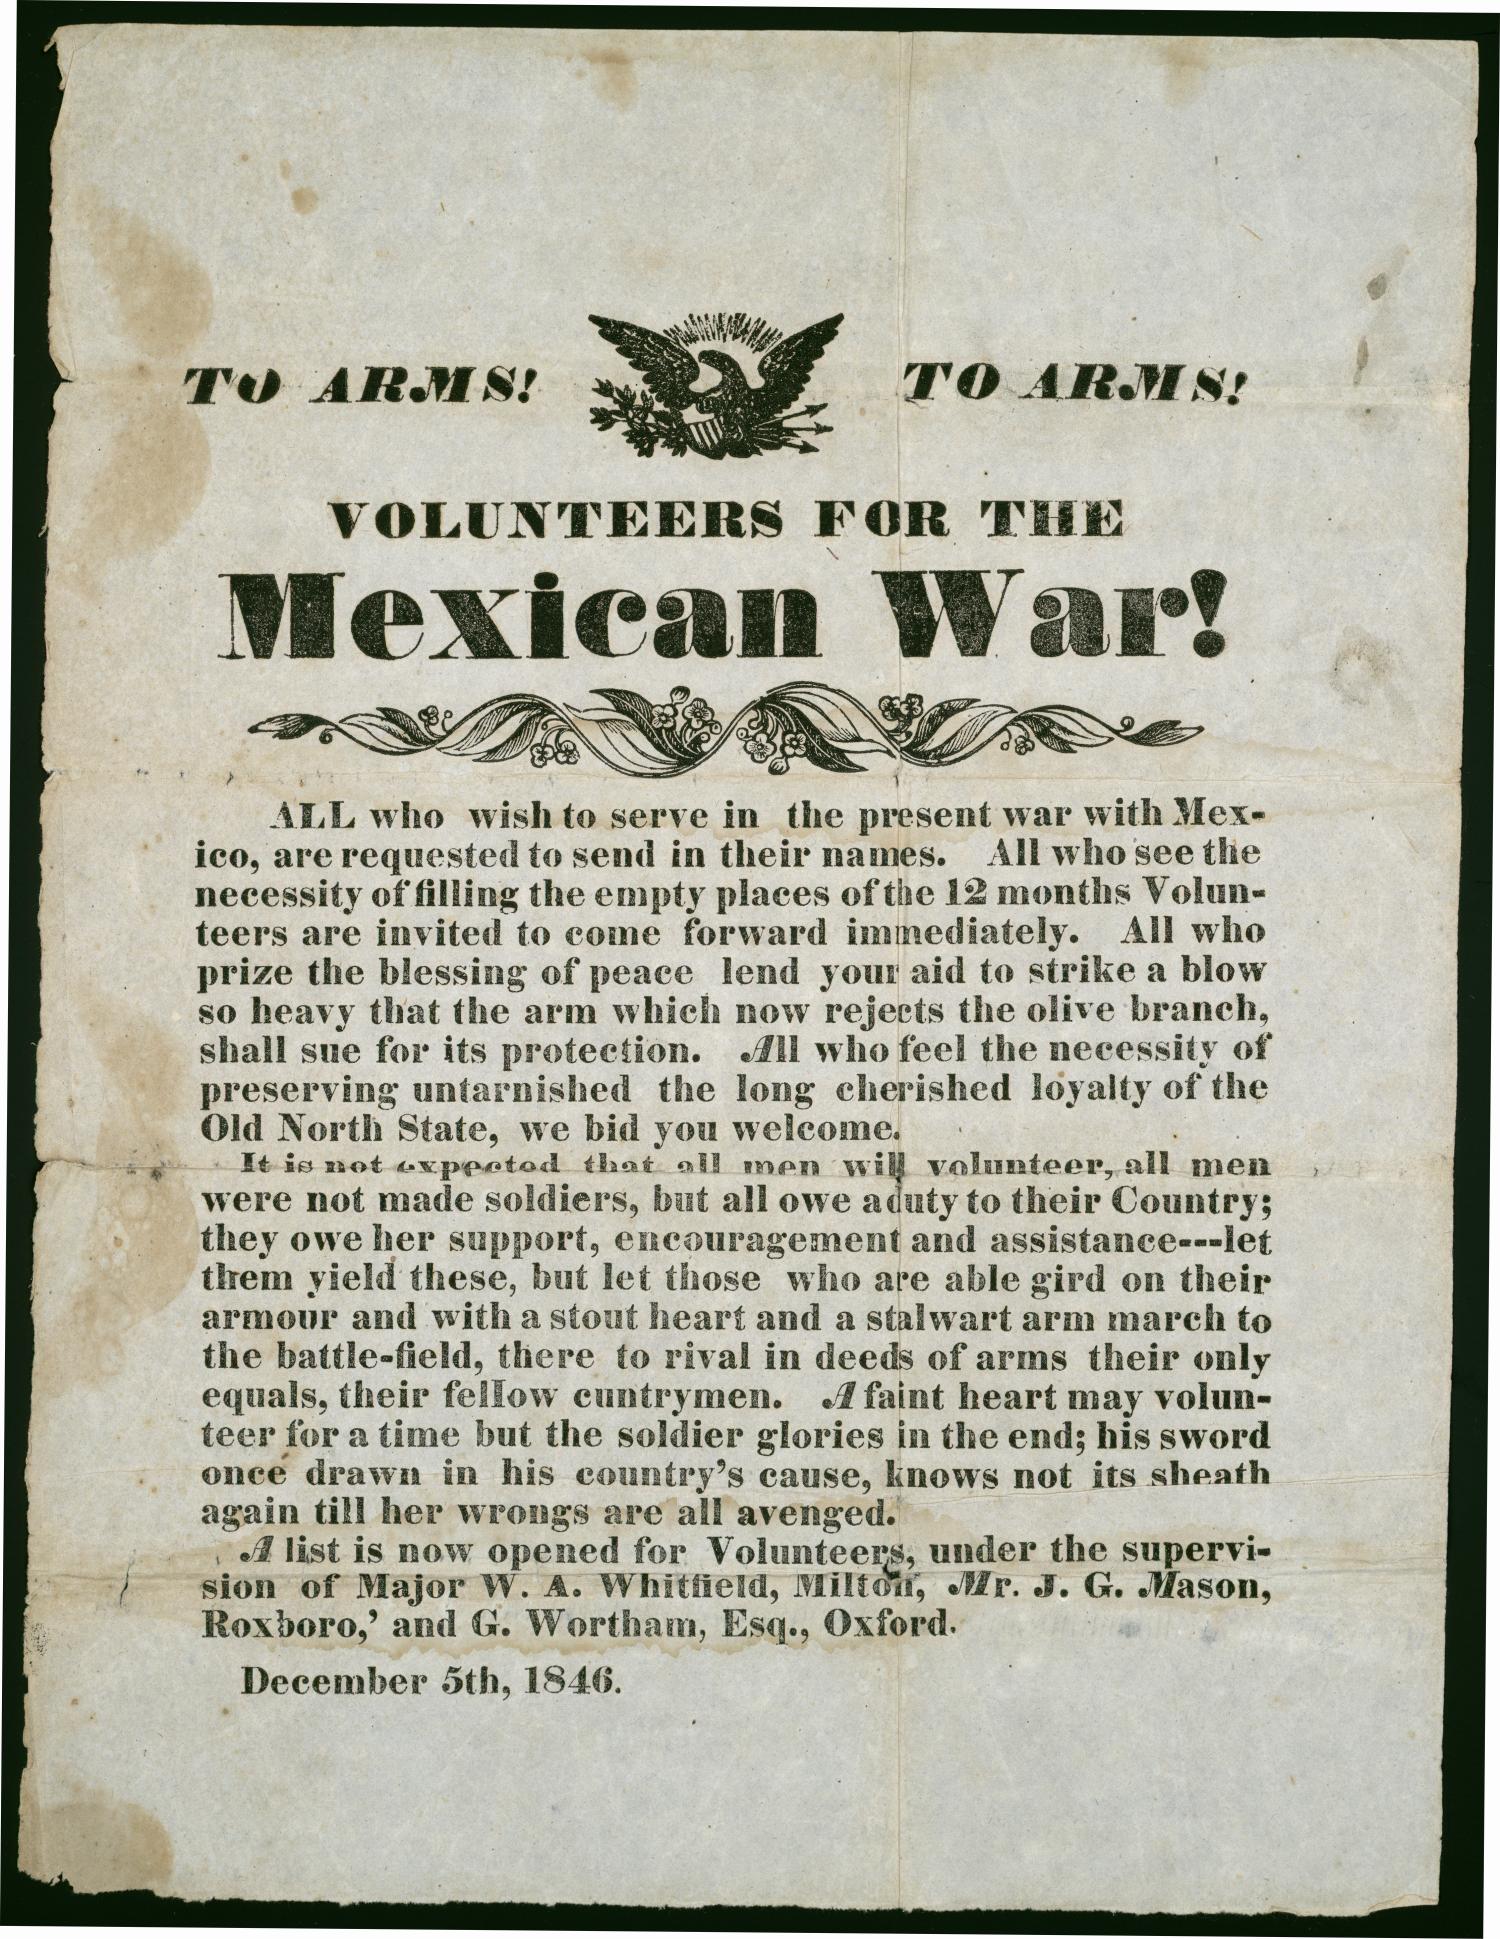 mexican american war argumentative essay